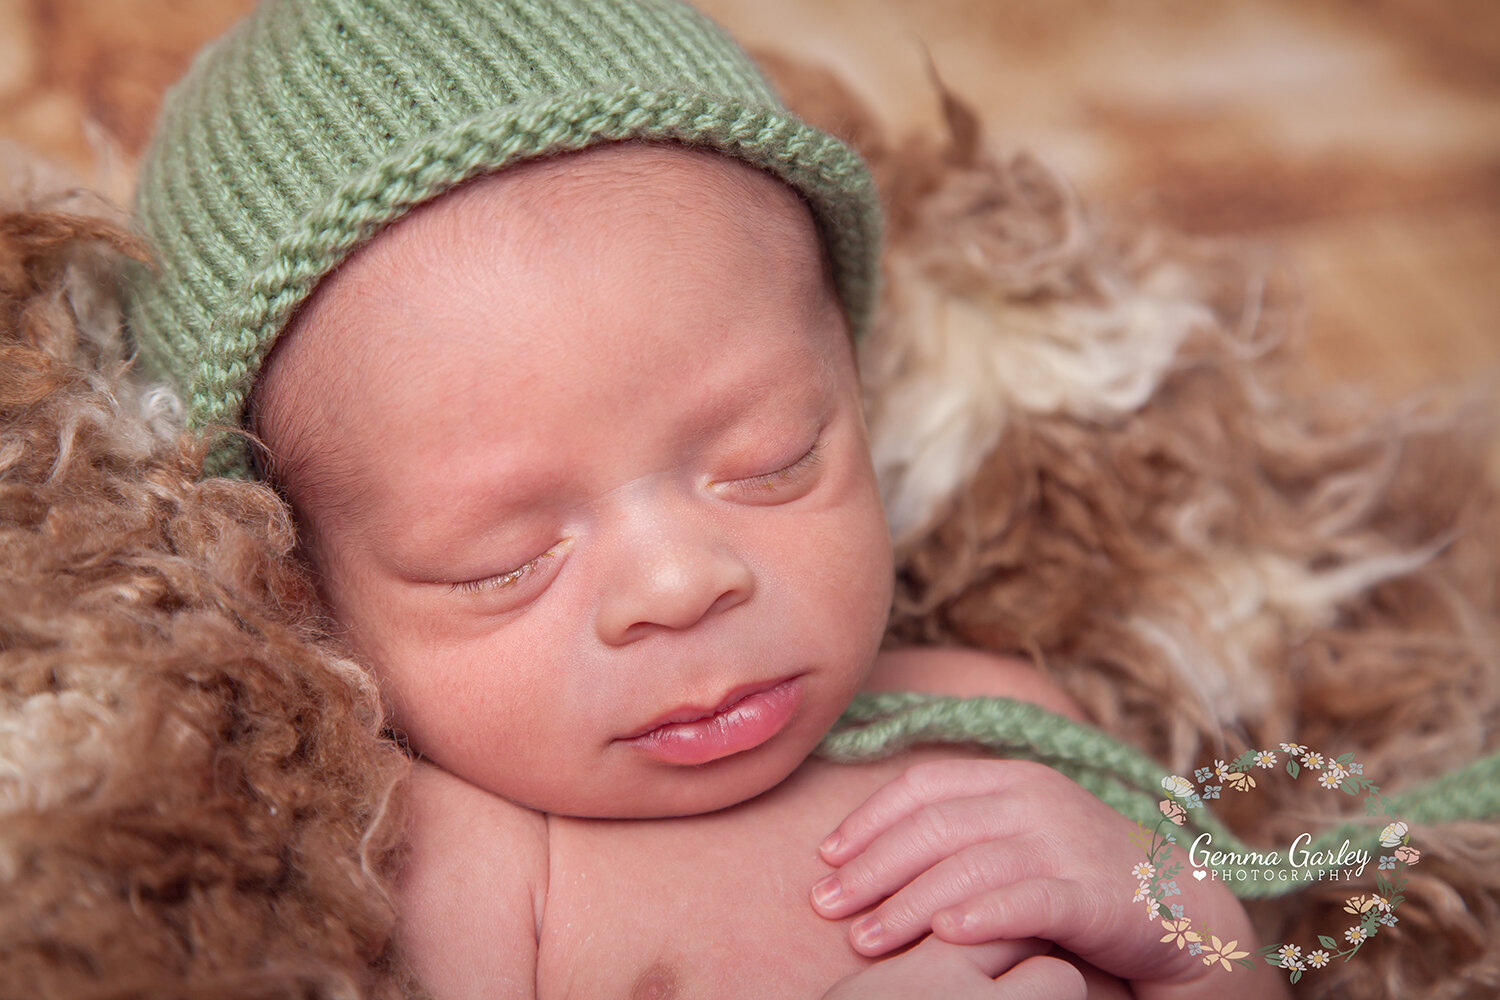 newborn photography baby photographer bournemouth Gemma Garley .jpg